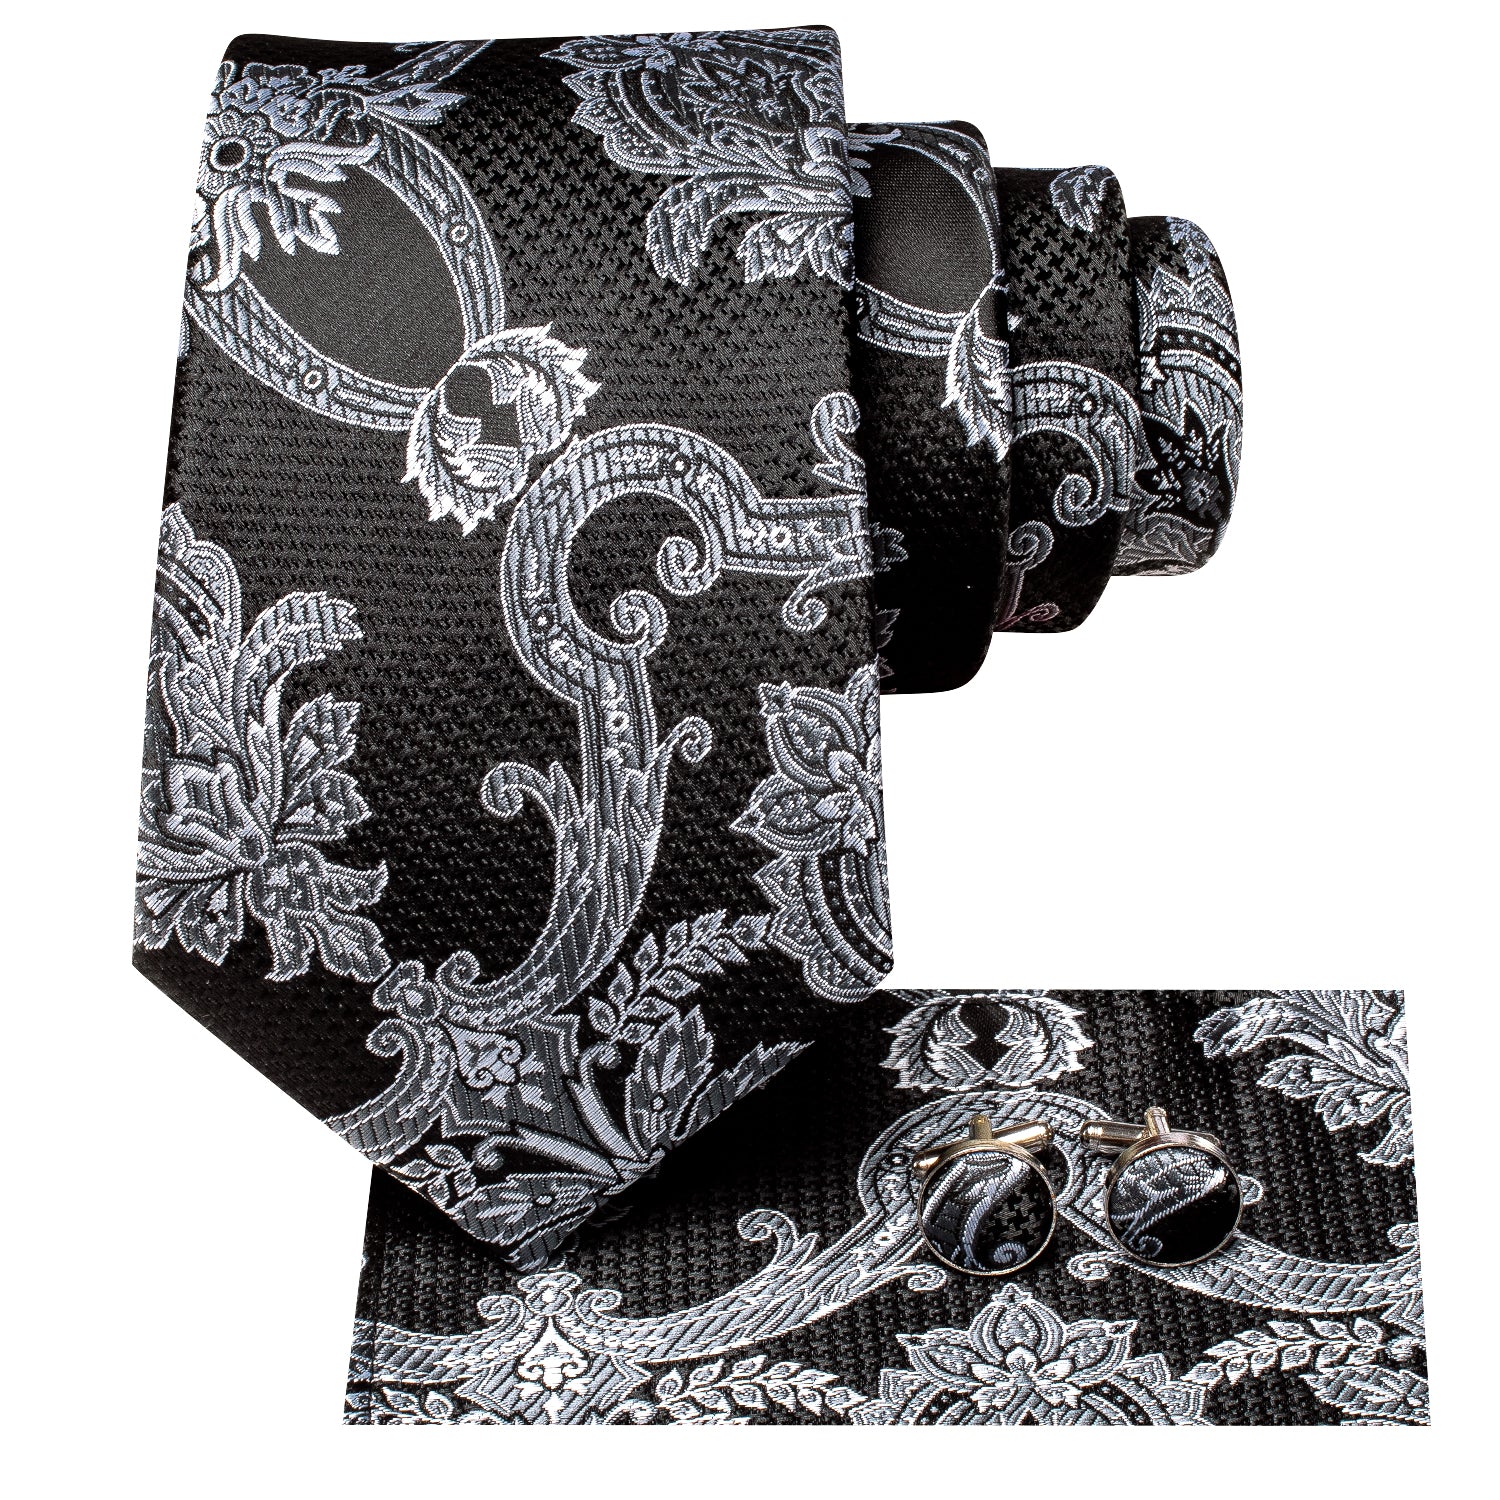 New Black White Floral Tie Pocket Square Cufflinks Set